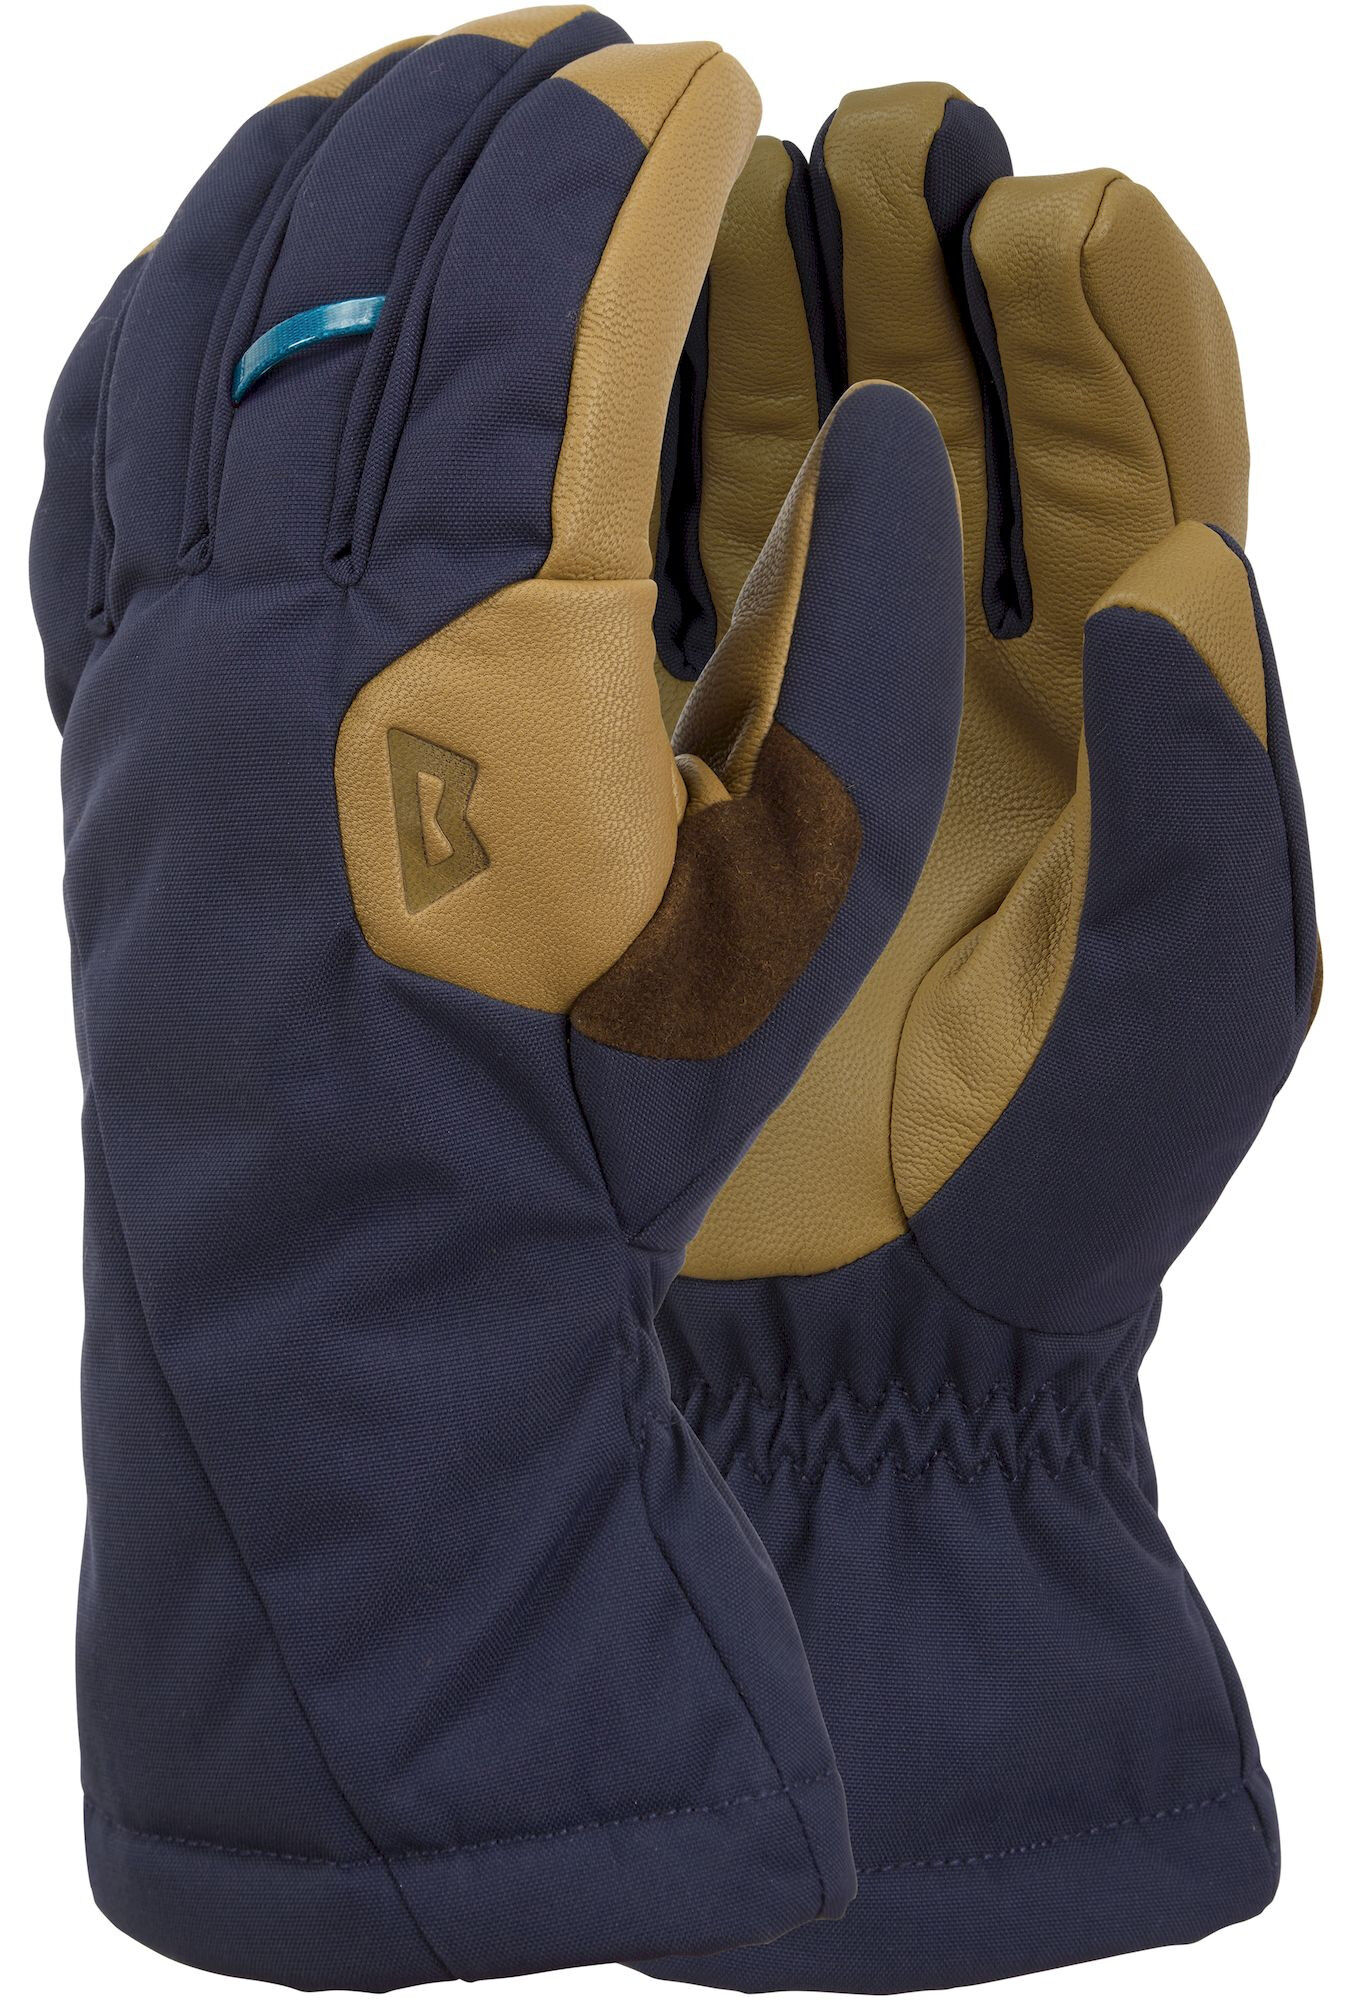 Mountain Equipment Guide Glove - Mountaineering gloves - Women's | Hardloop